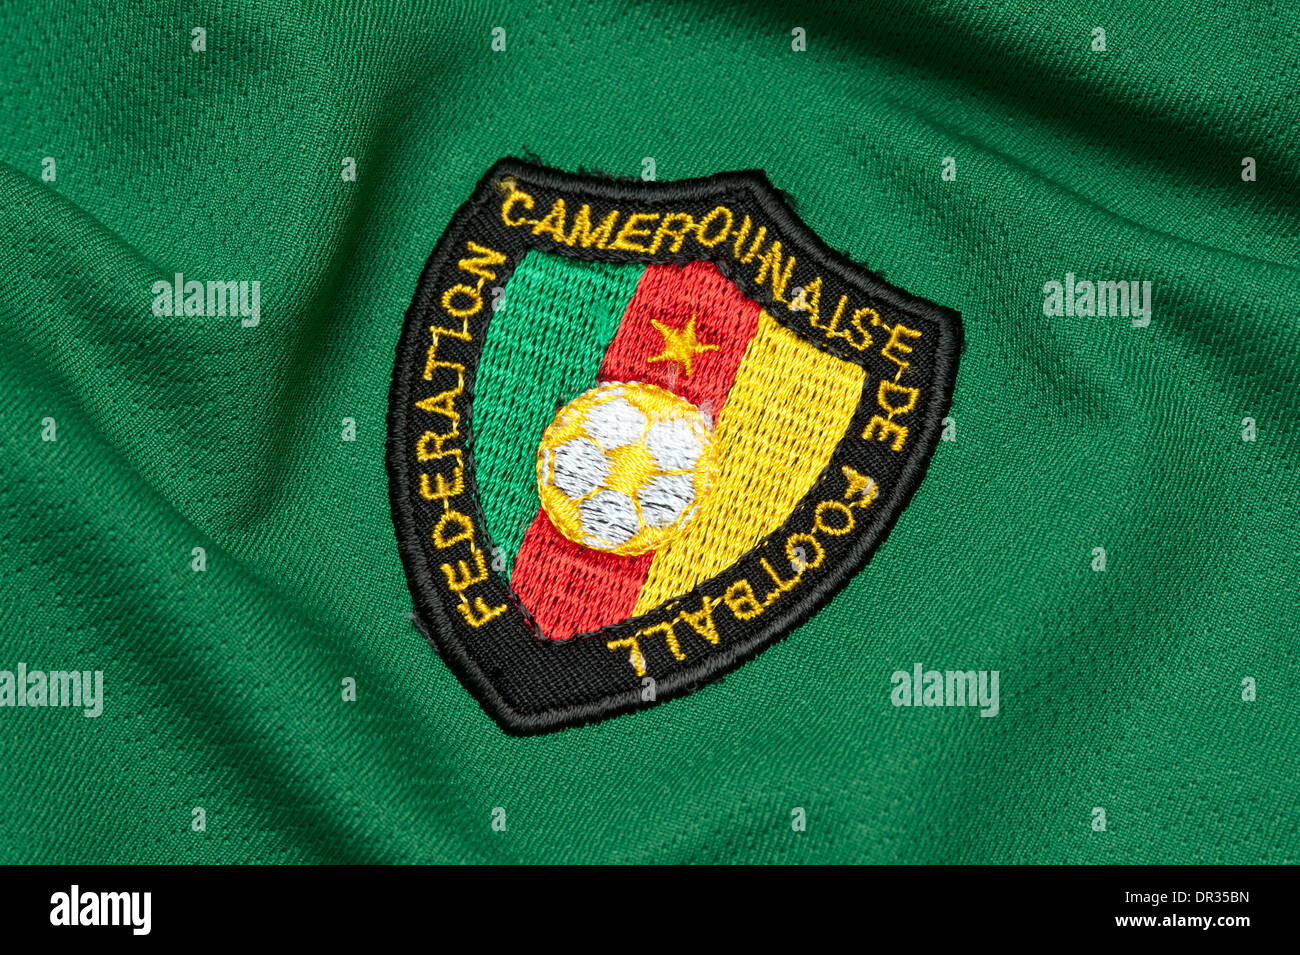 Chiusura del Cameroon National team kit calcio Foto Stock